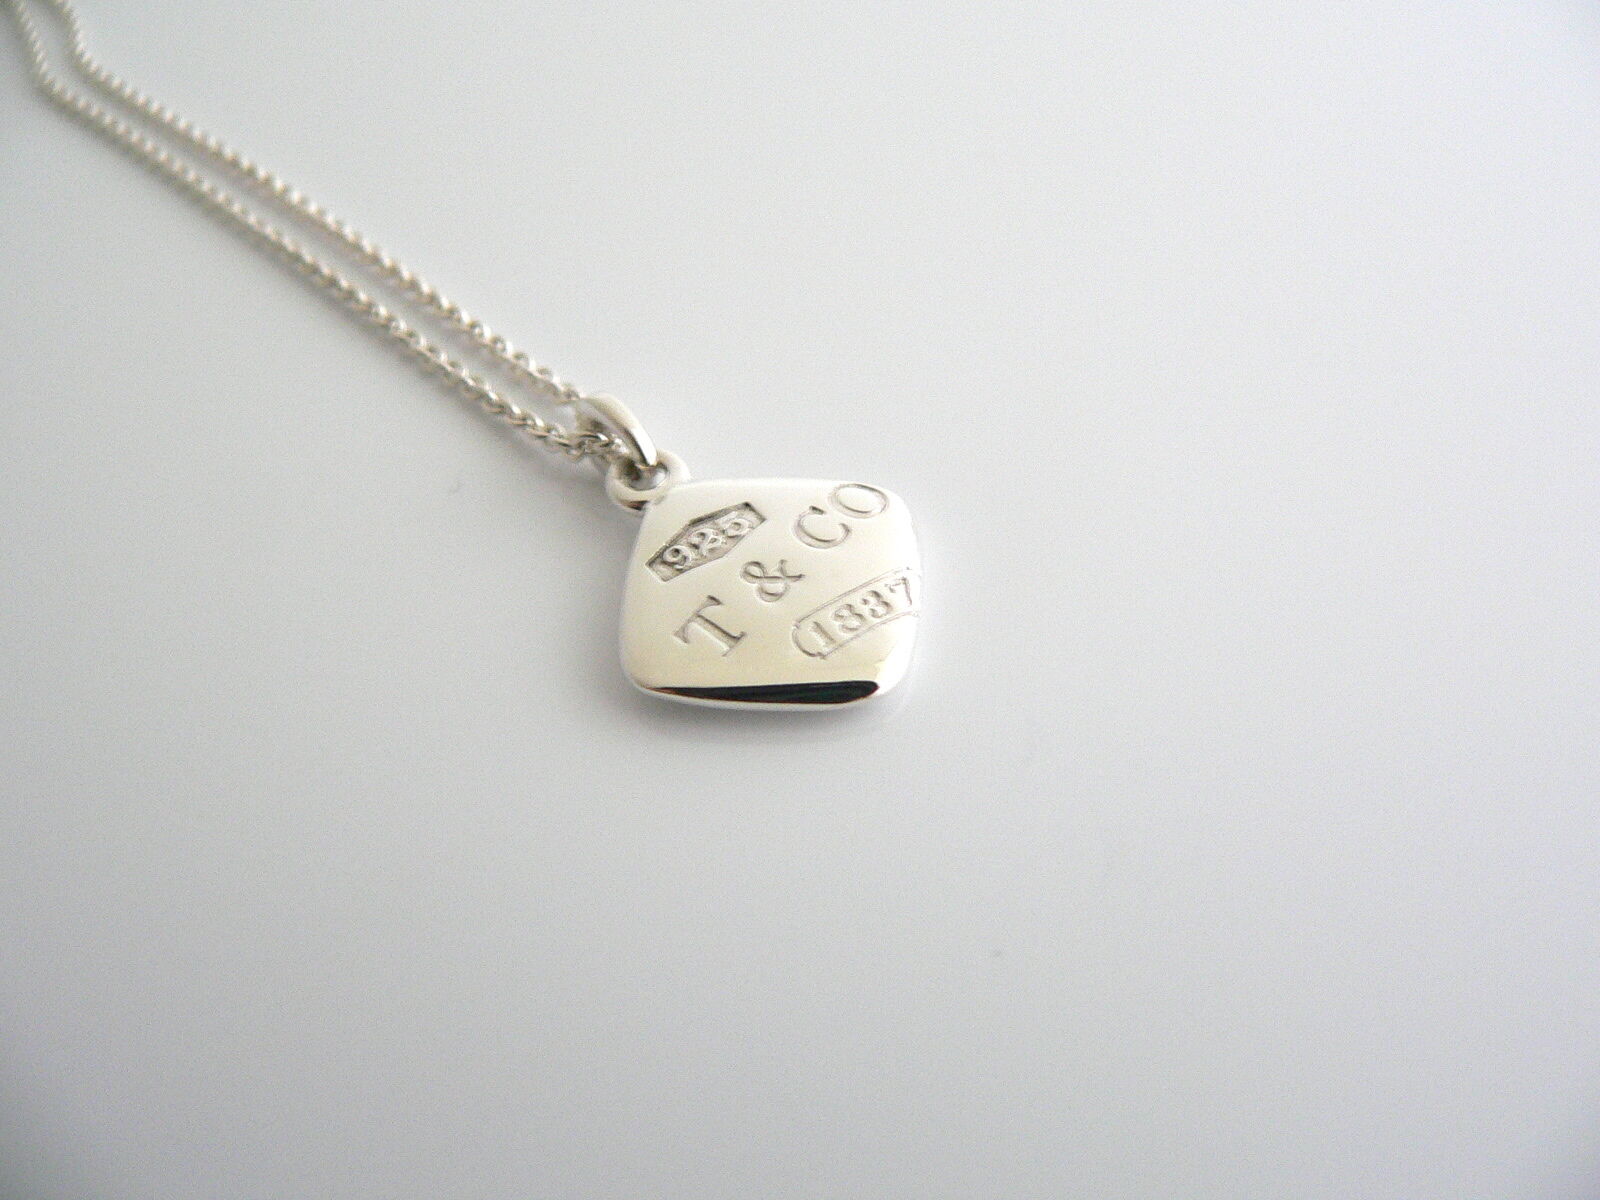 Tiffany & Co Silver 1837 Square Necklace Pendant Charm Chain Gift Love Statement